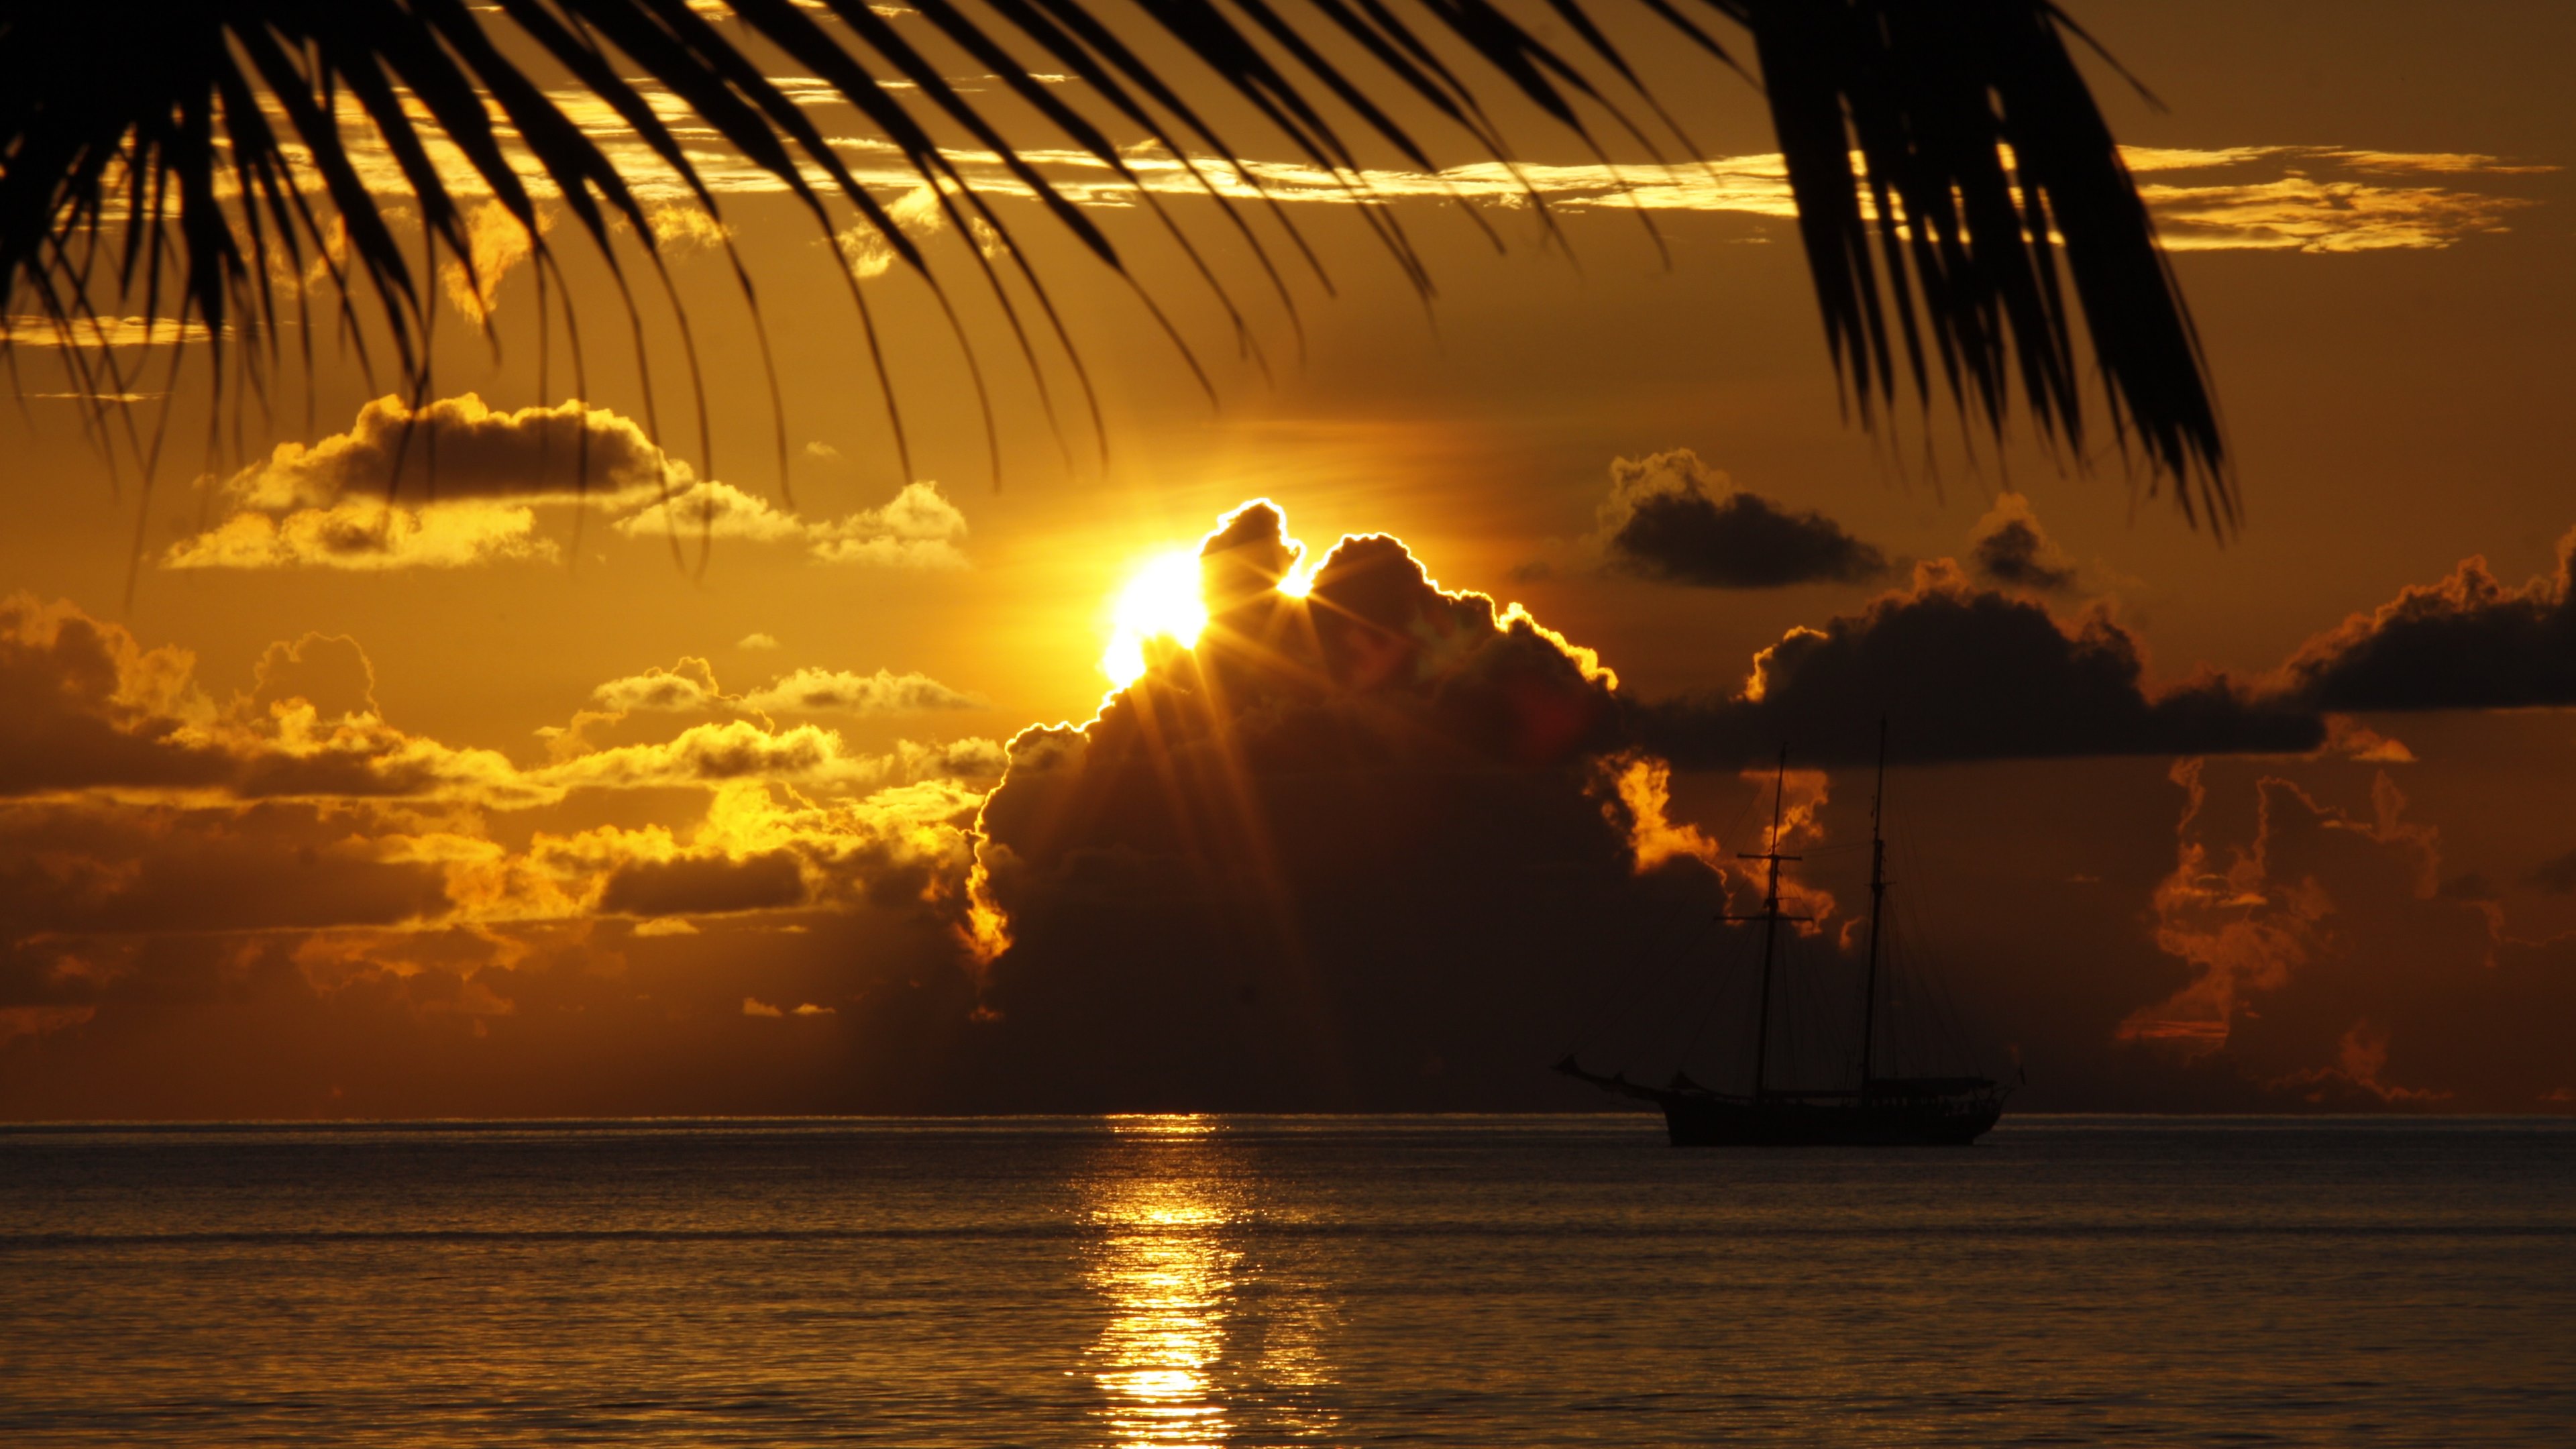 seascape, earth, sunset Image for desktop